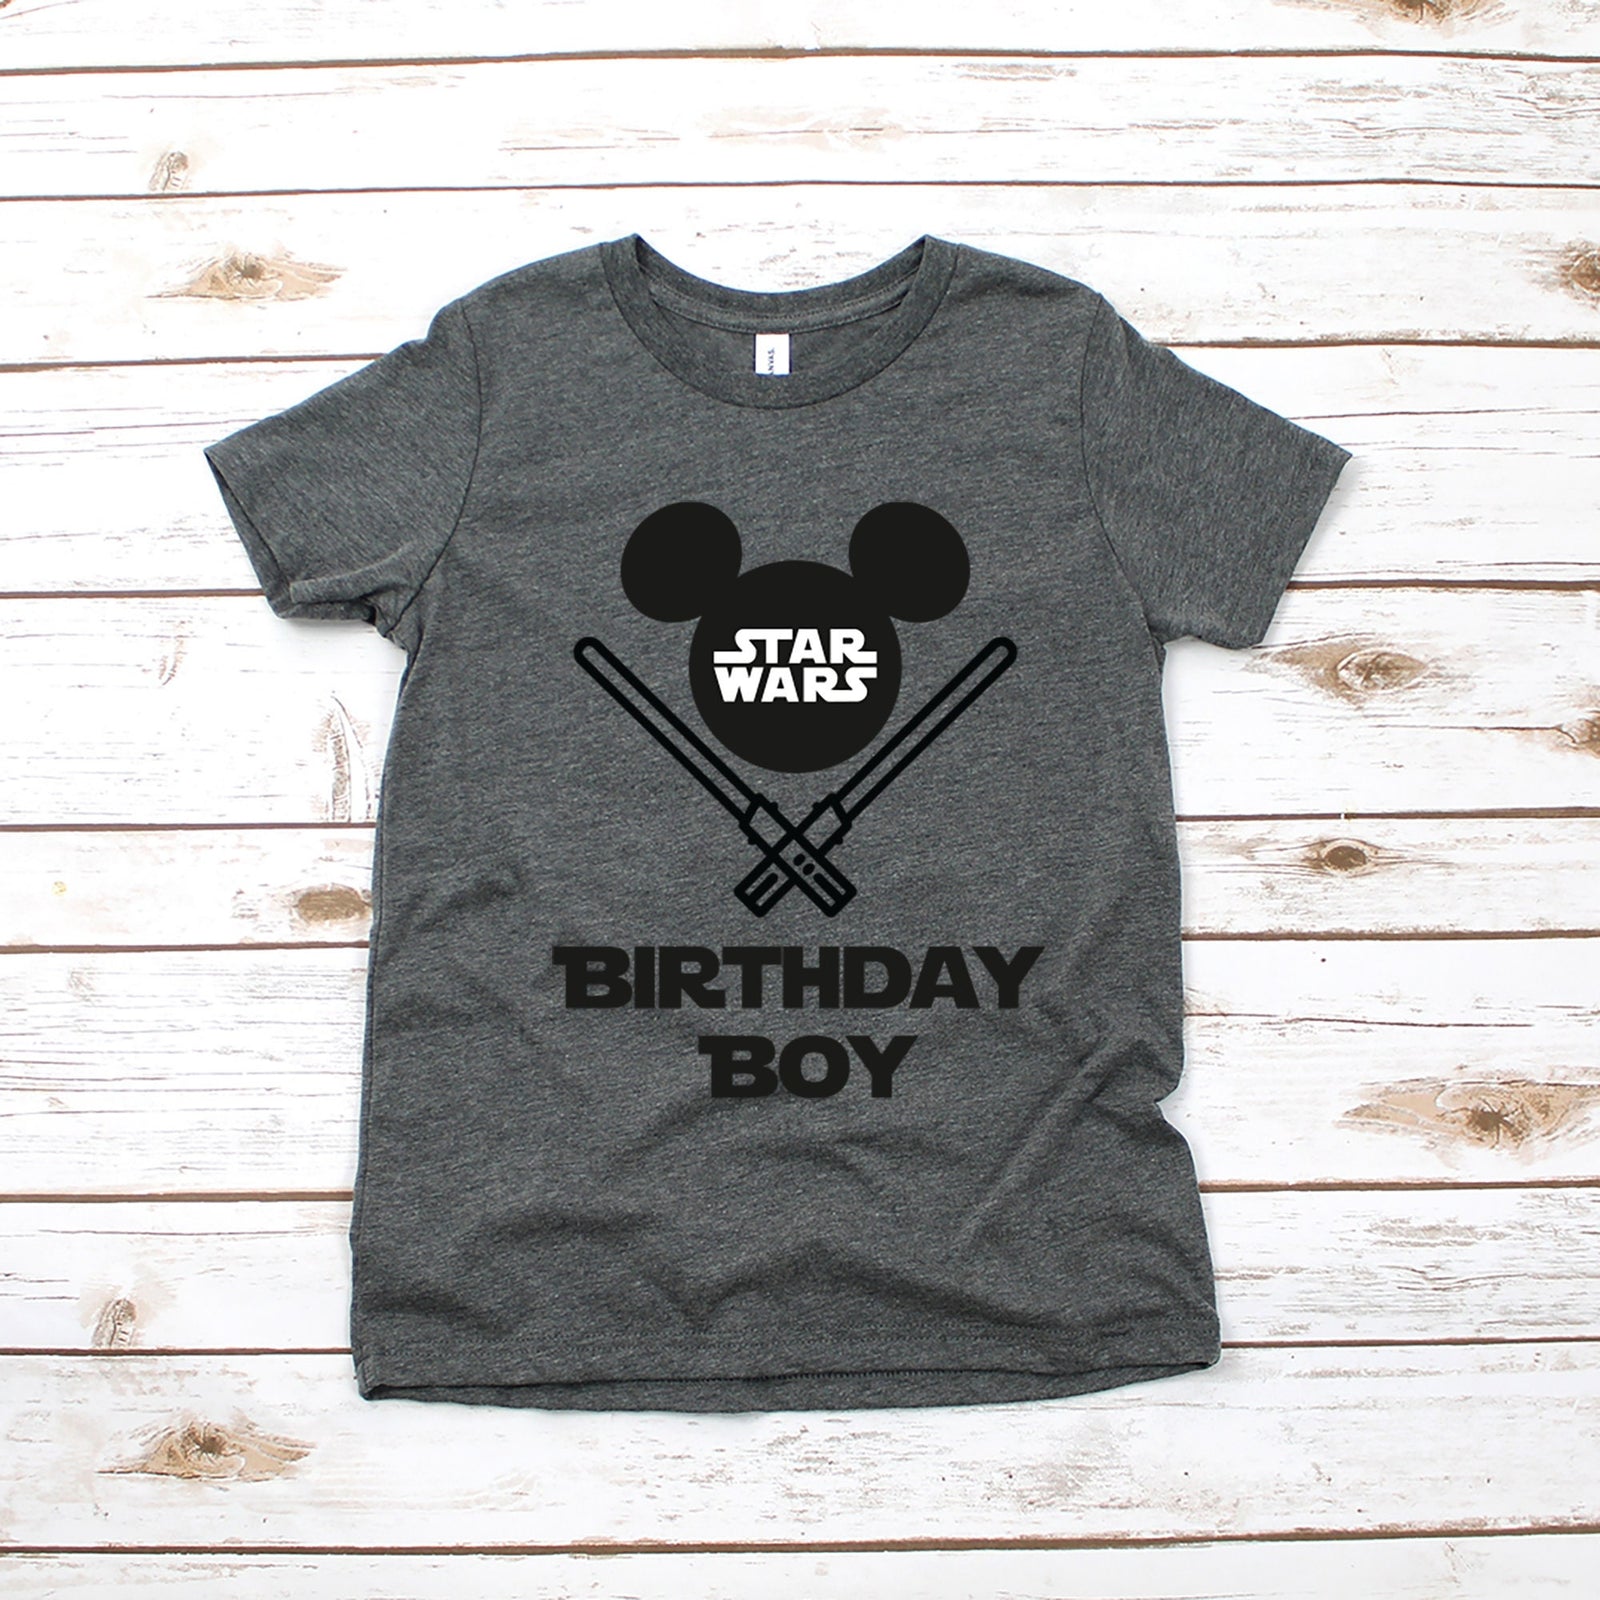 Birthday Boy Star Wars Mickey Mouse Youth T Shirt - Disney Kids T Shirts - Celebration Party